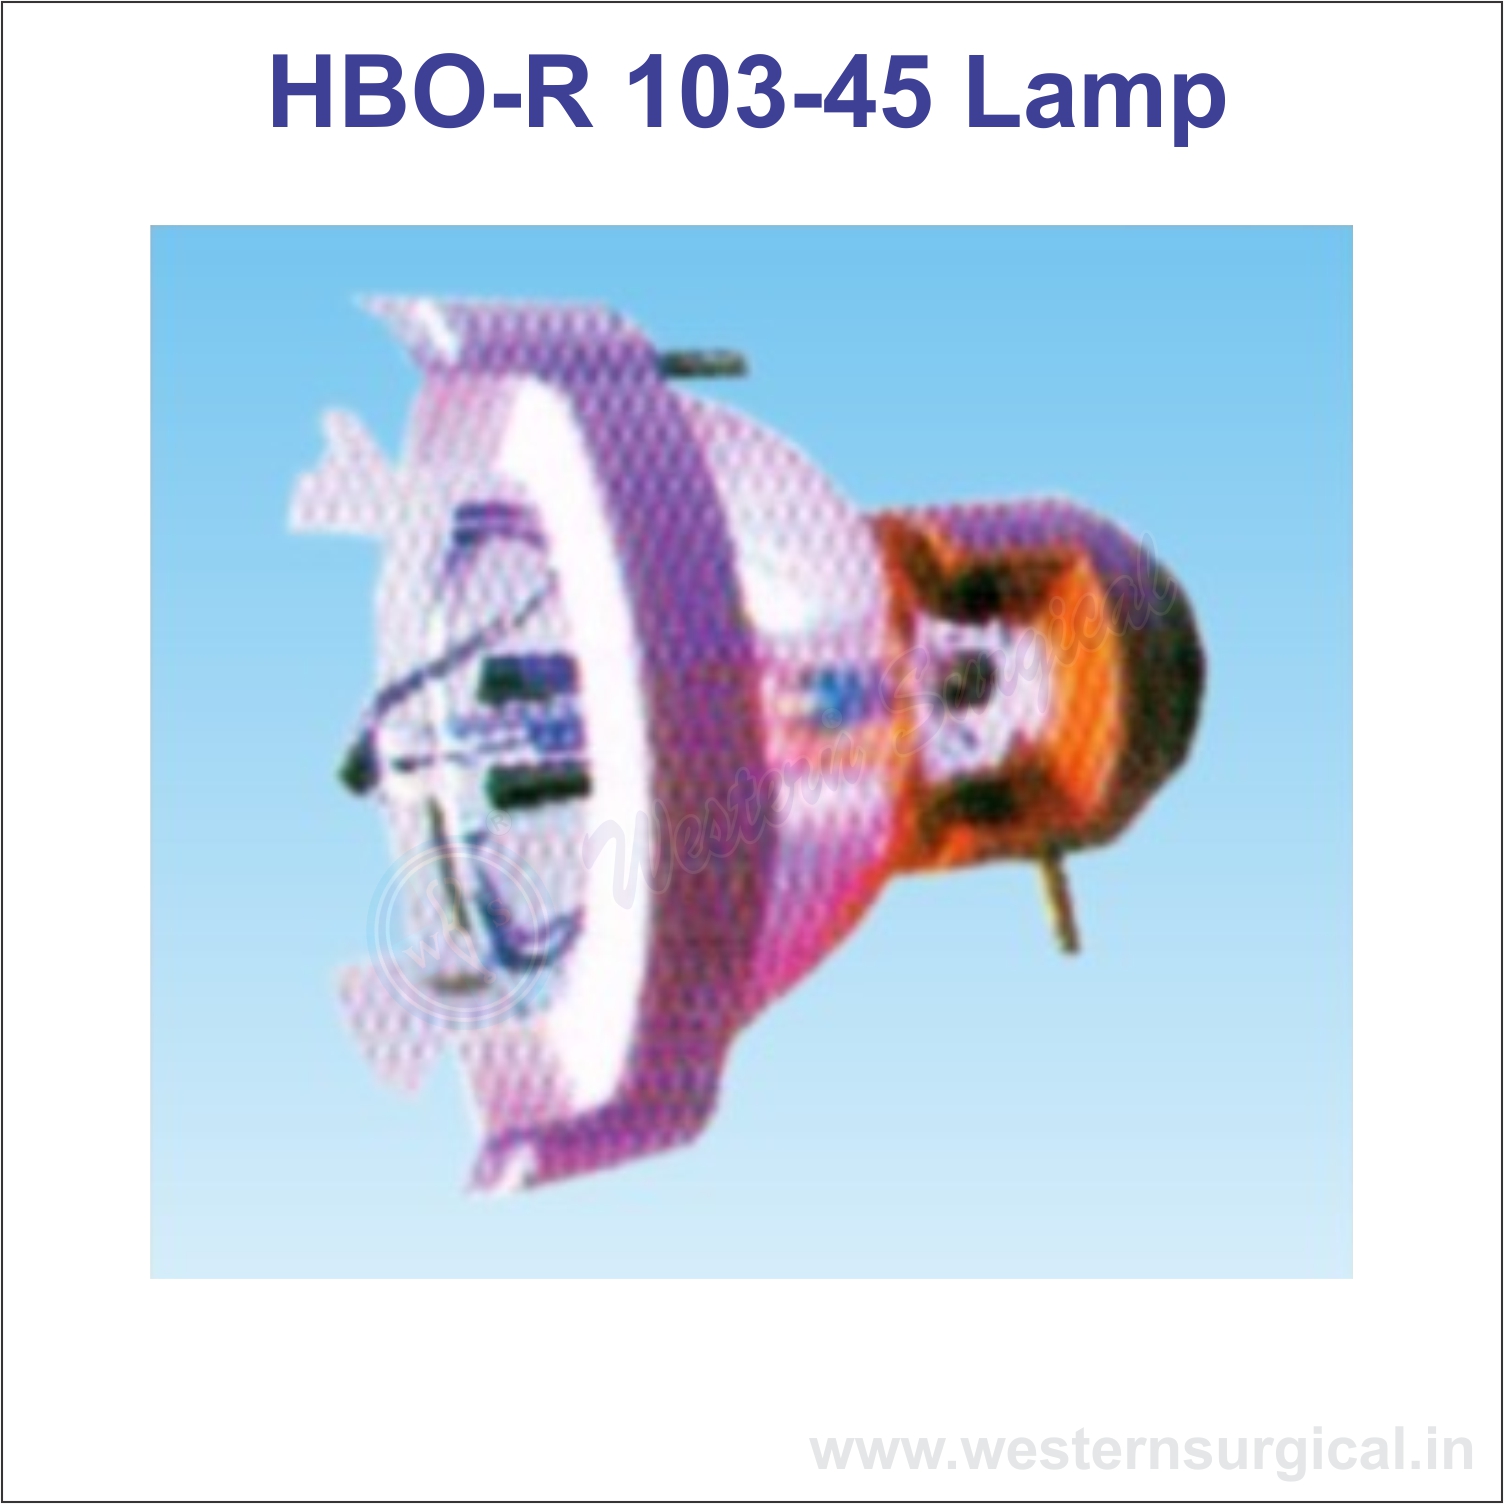 HBO-R 103-45 Lamp